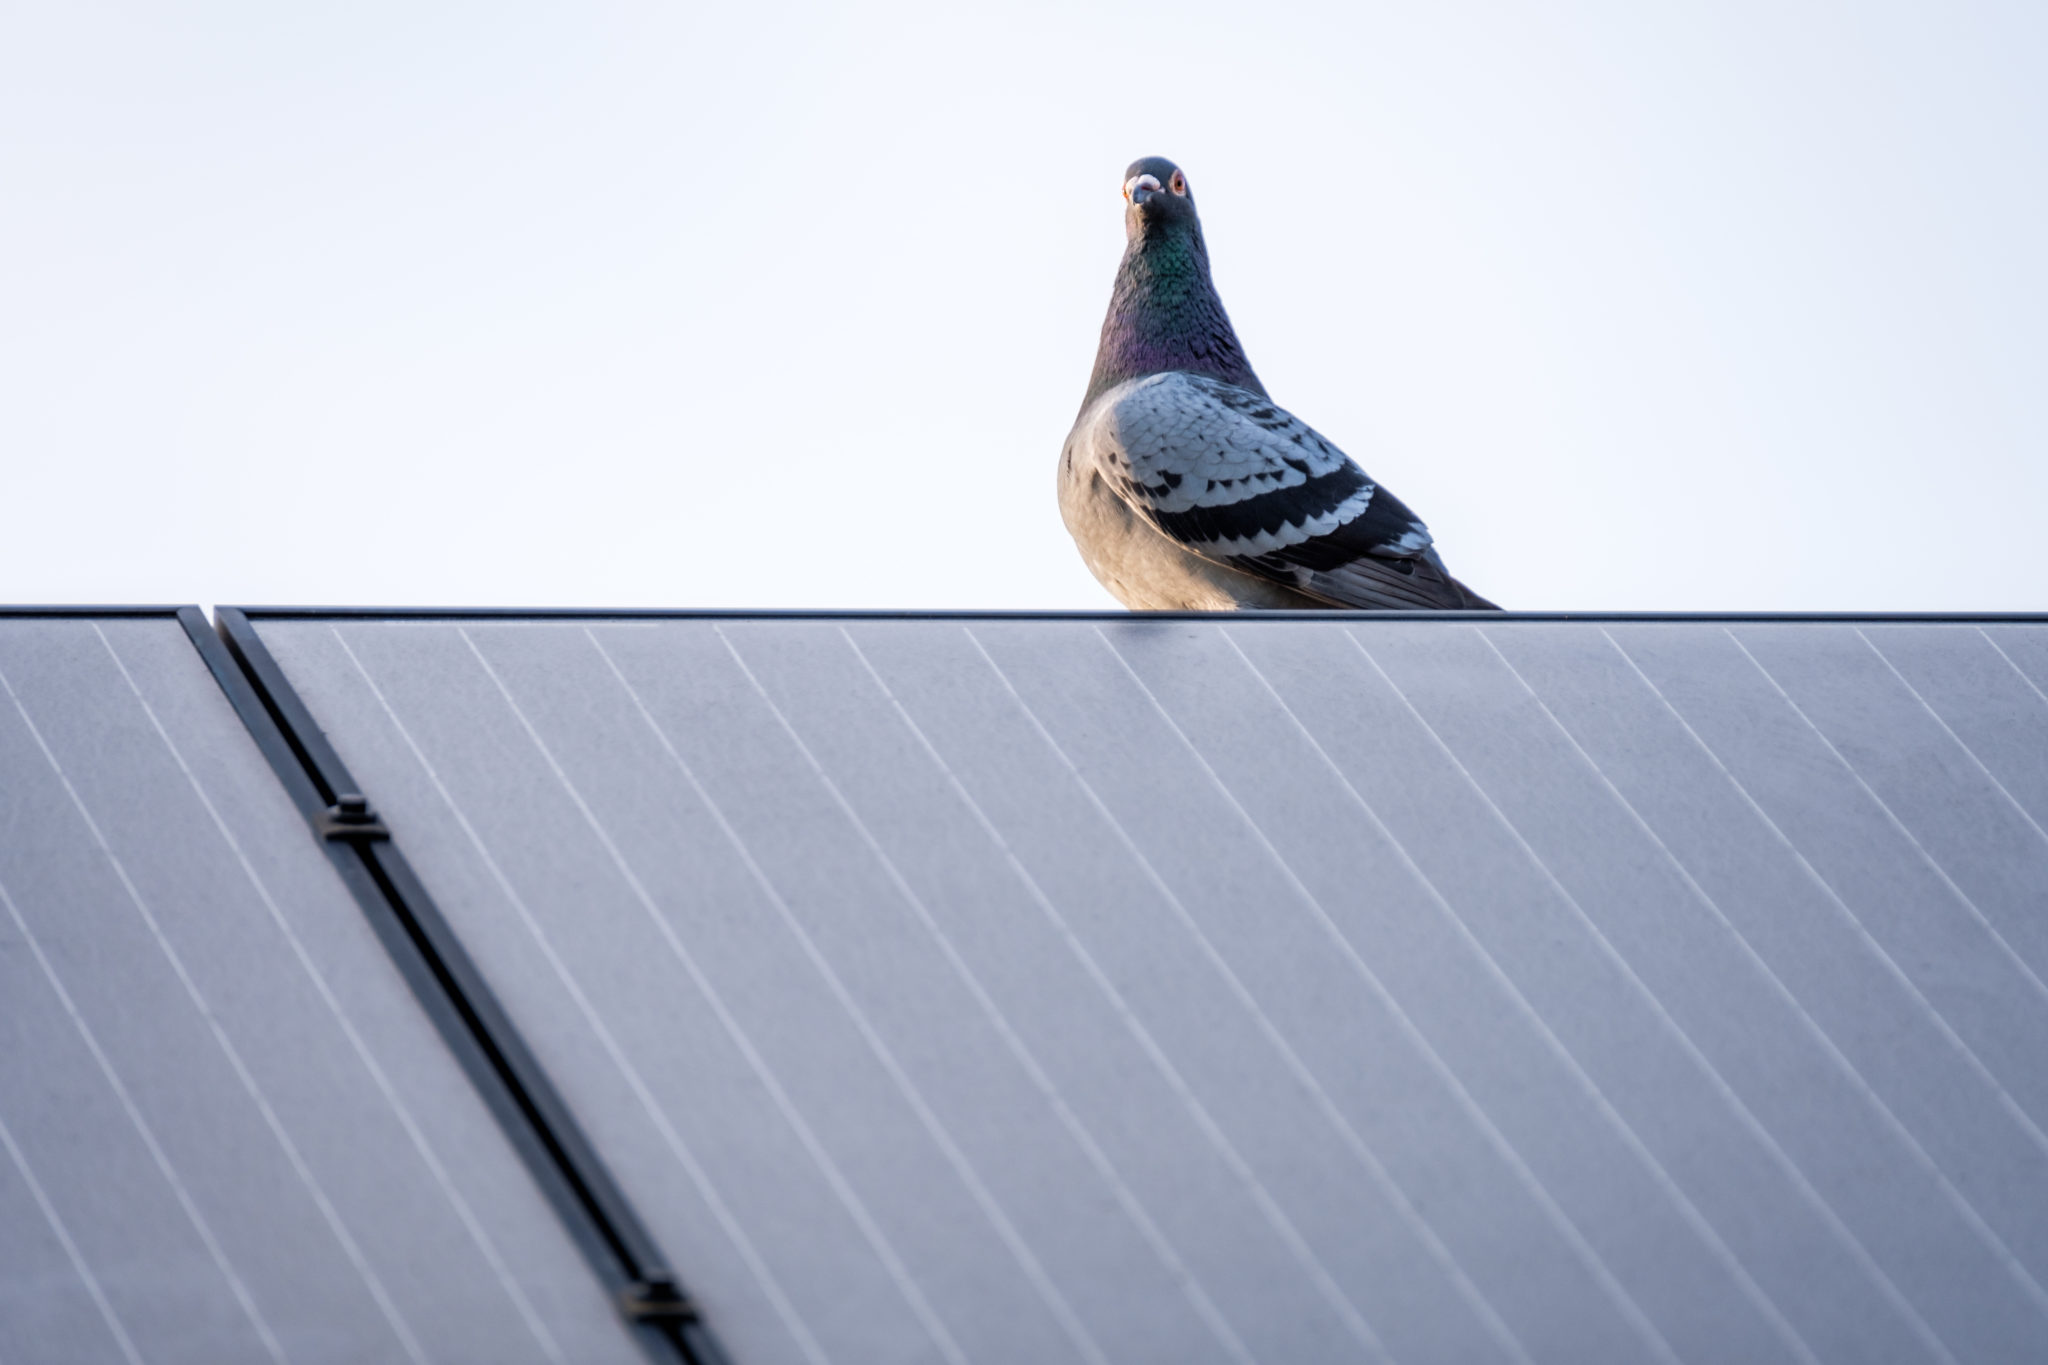 Rockhampton - bird control for solar panels